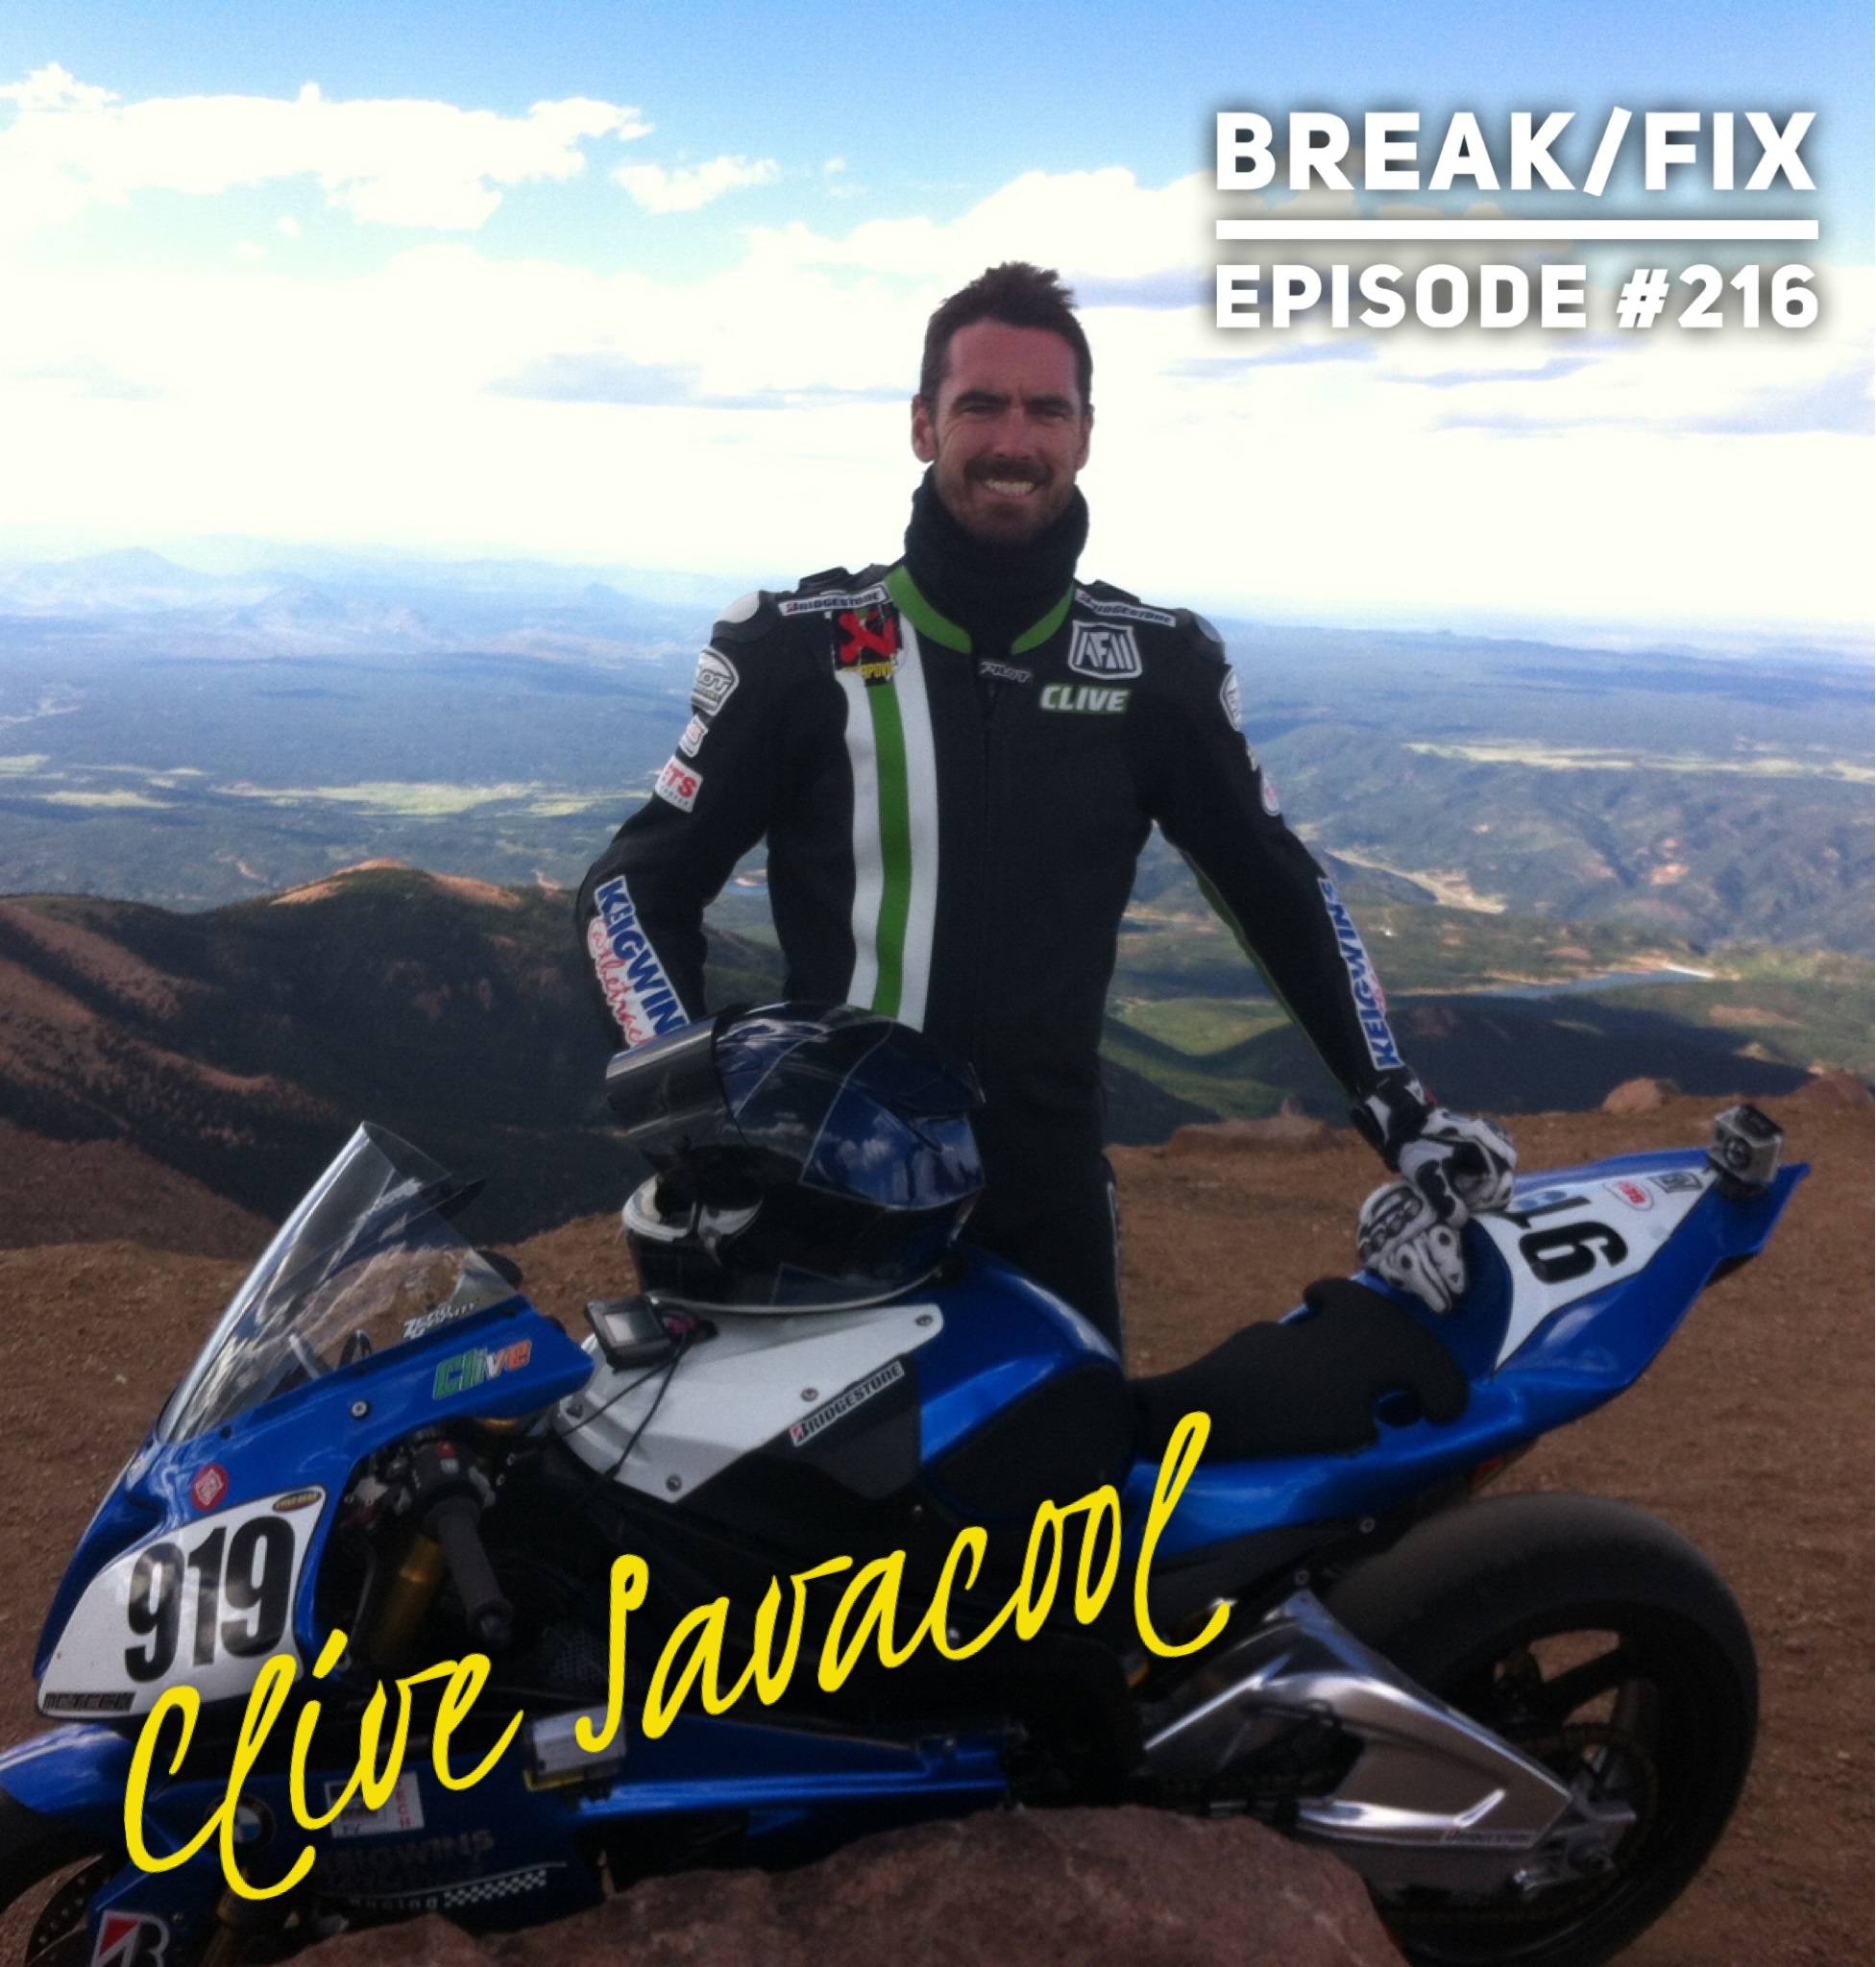 Clive Savacool on Break/Fix Podcast